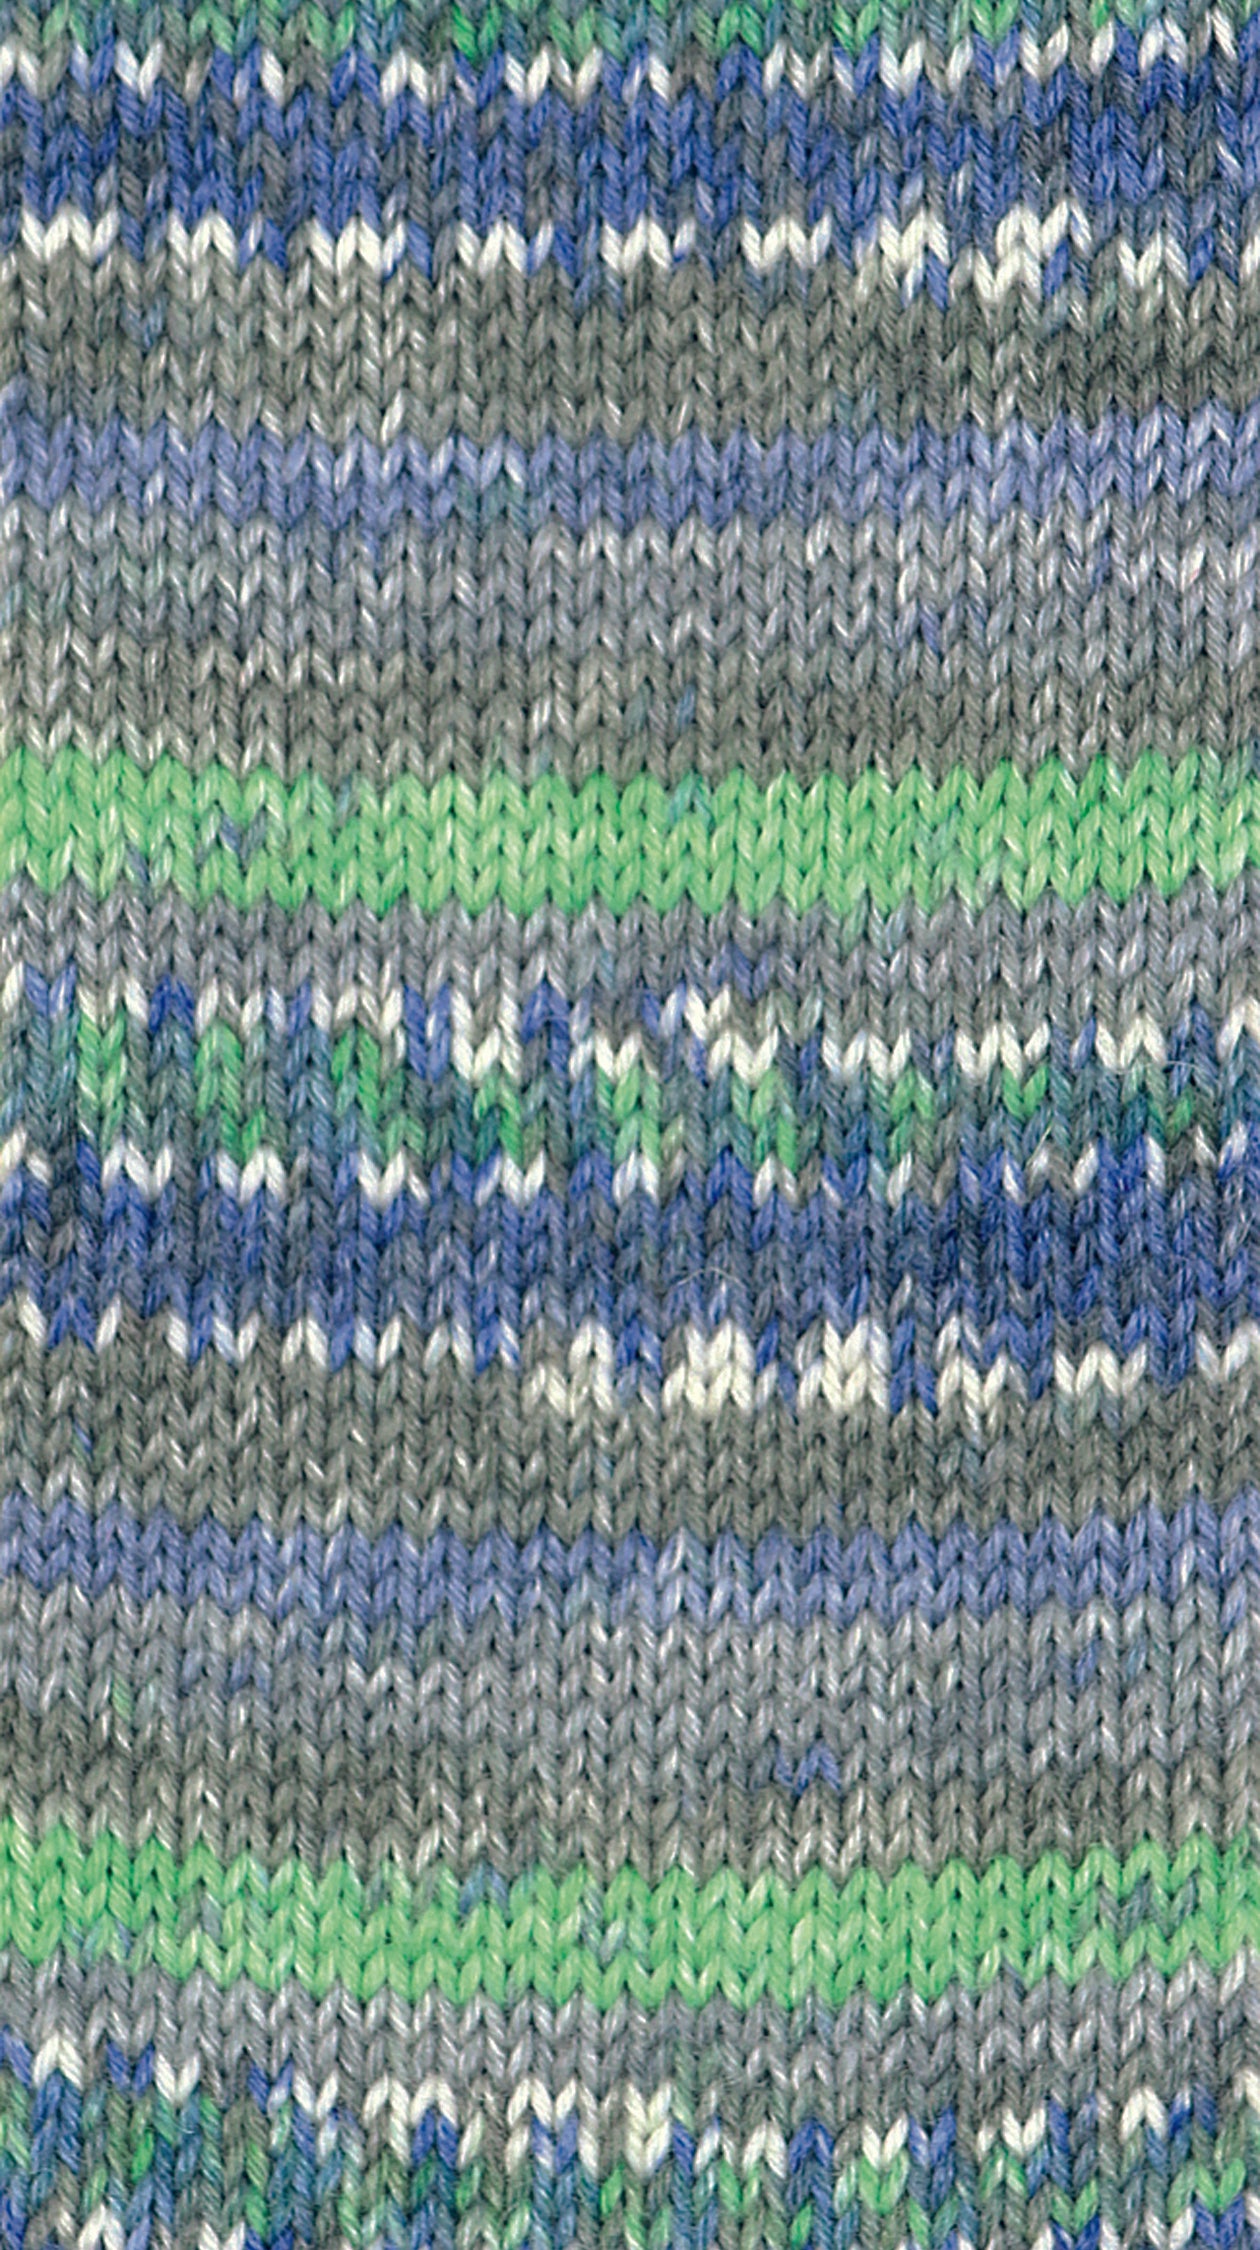 Schoeller-Austermann Step6, Irish Rainbow, 150g, 97826, Farbe bergwiese 716